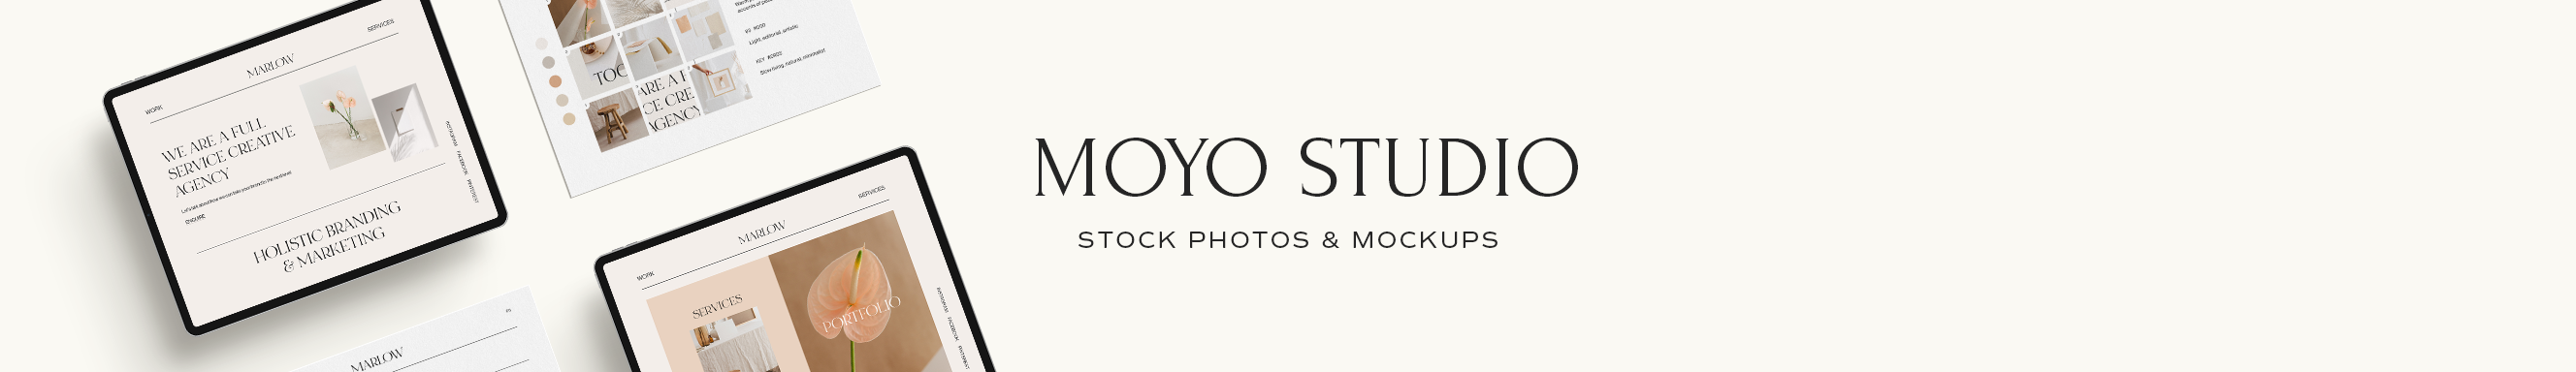 Moyo-Studio-Banner-2656×384-1